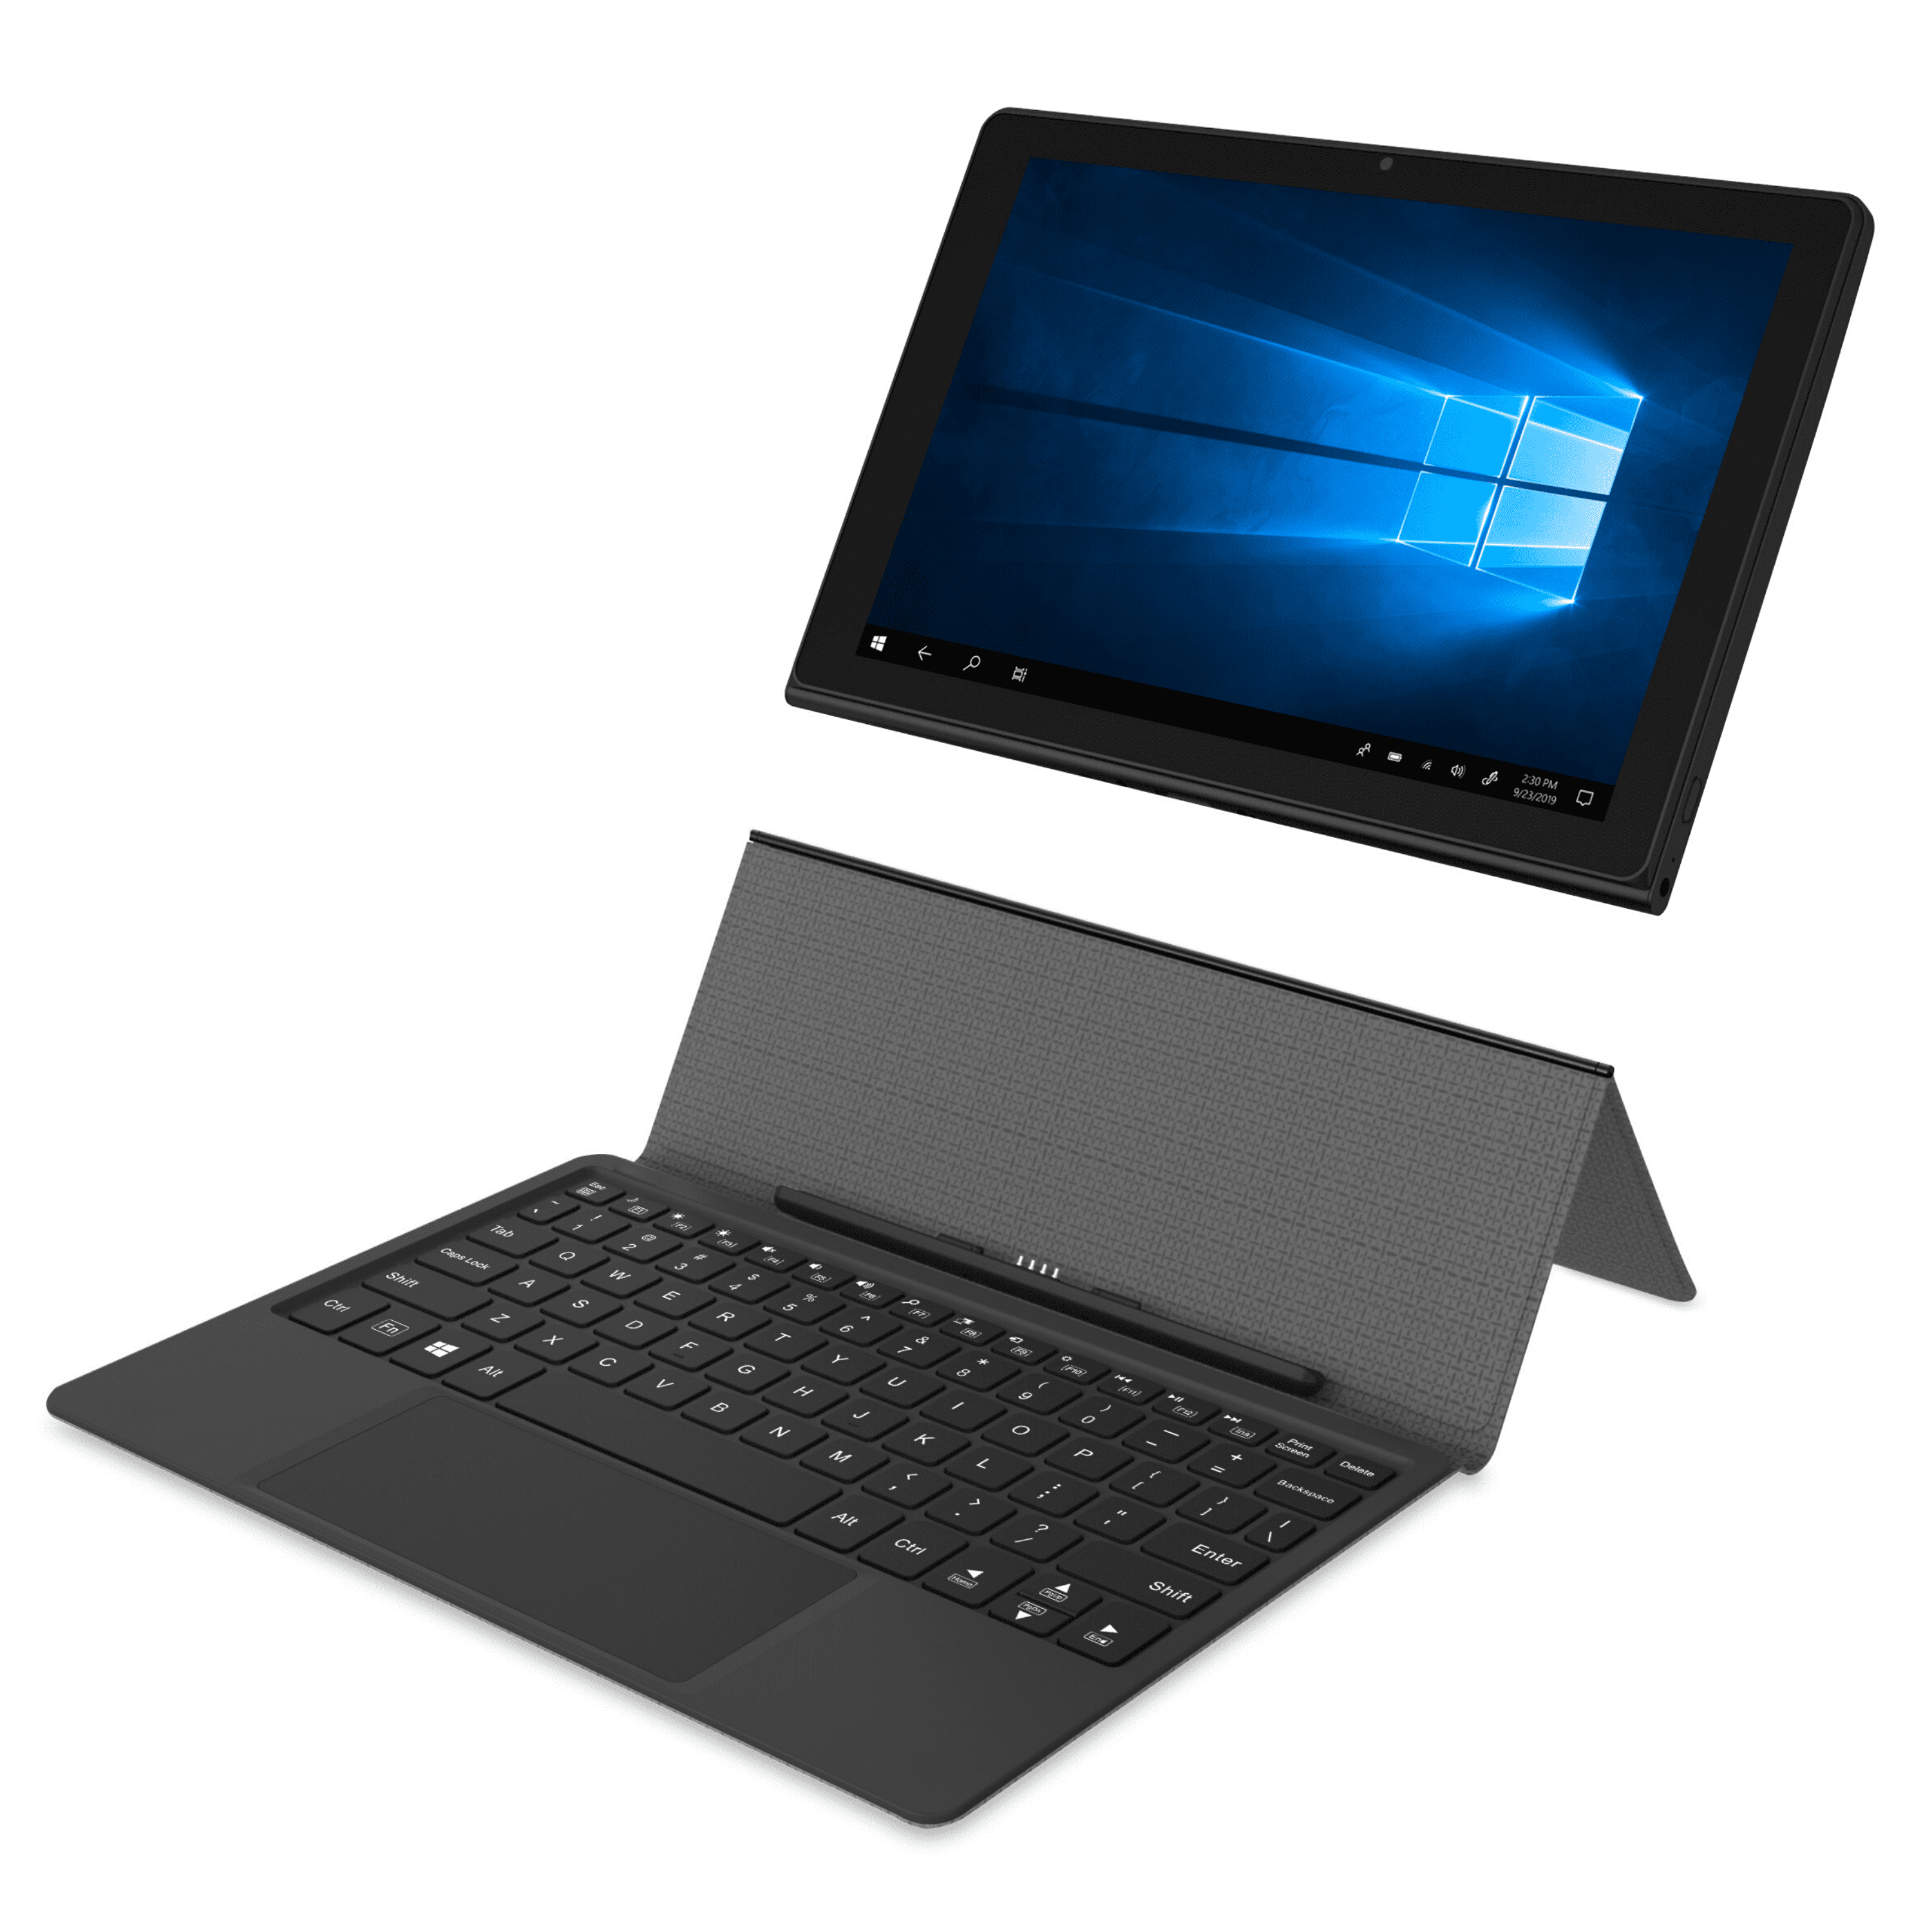 Onn 10 1 2 In 1 Windows Tablet With Keyboard 64gb Storage 4gb Ram Intel Celeron N4000 Processor Hd Display Walmart Com Walmart Com